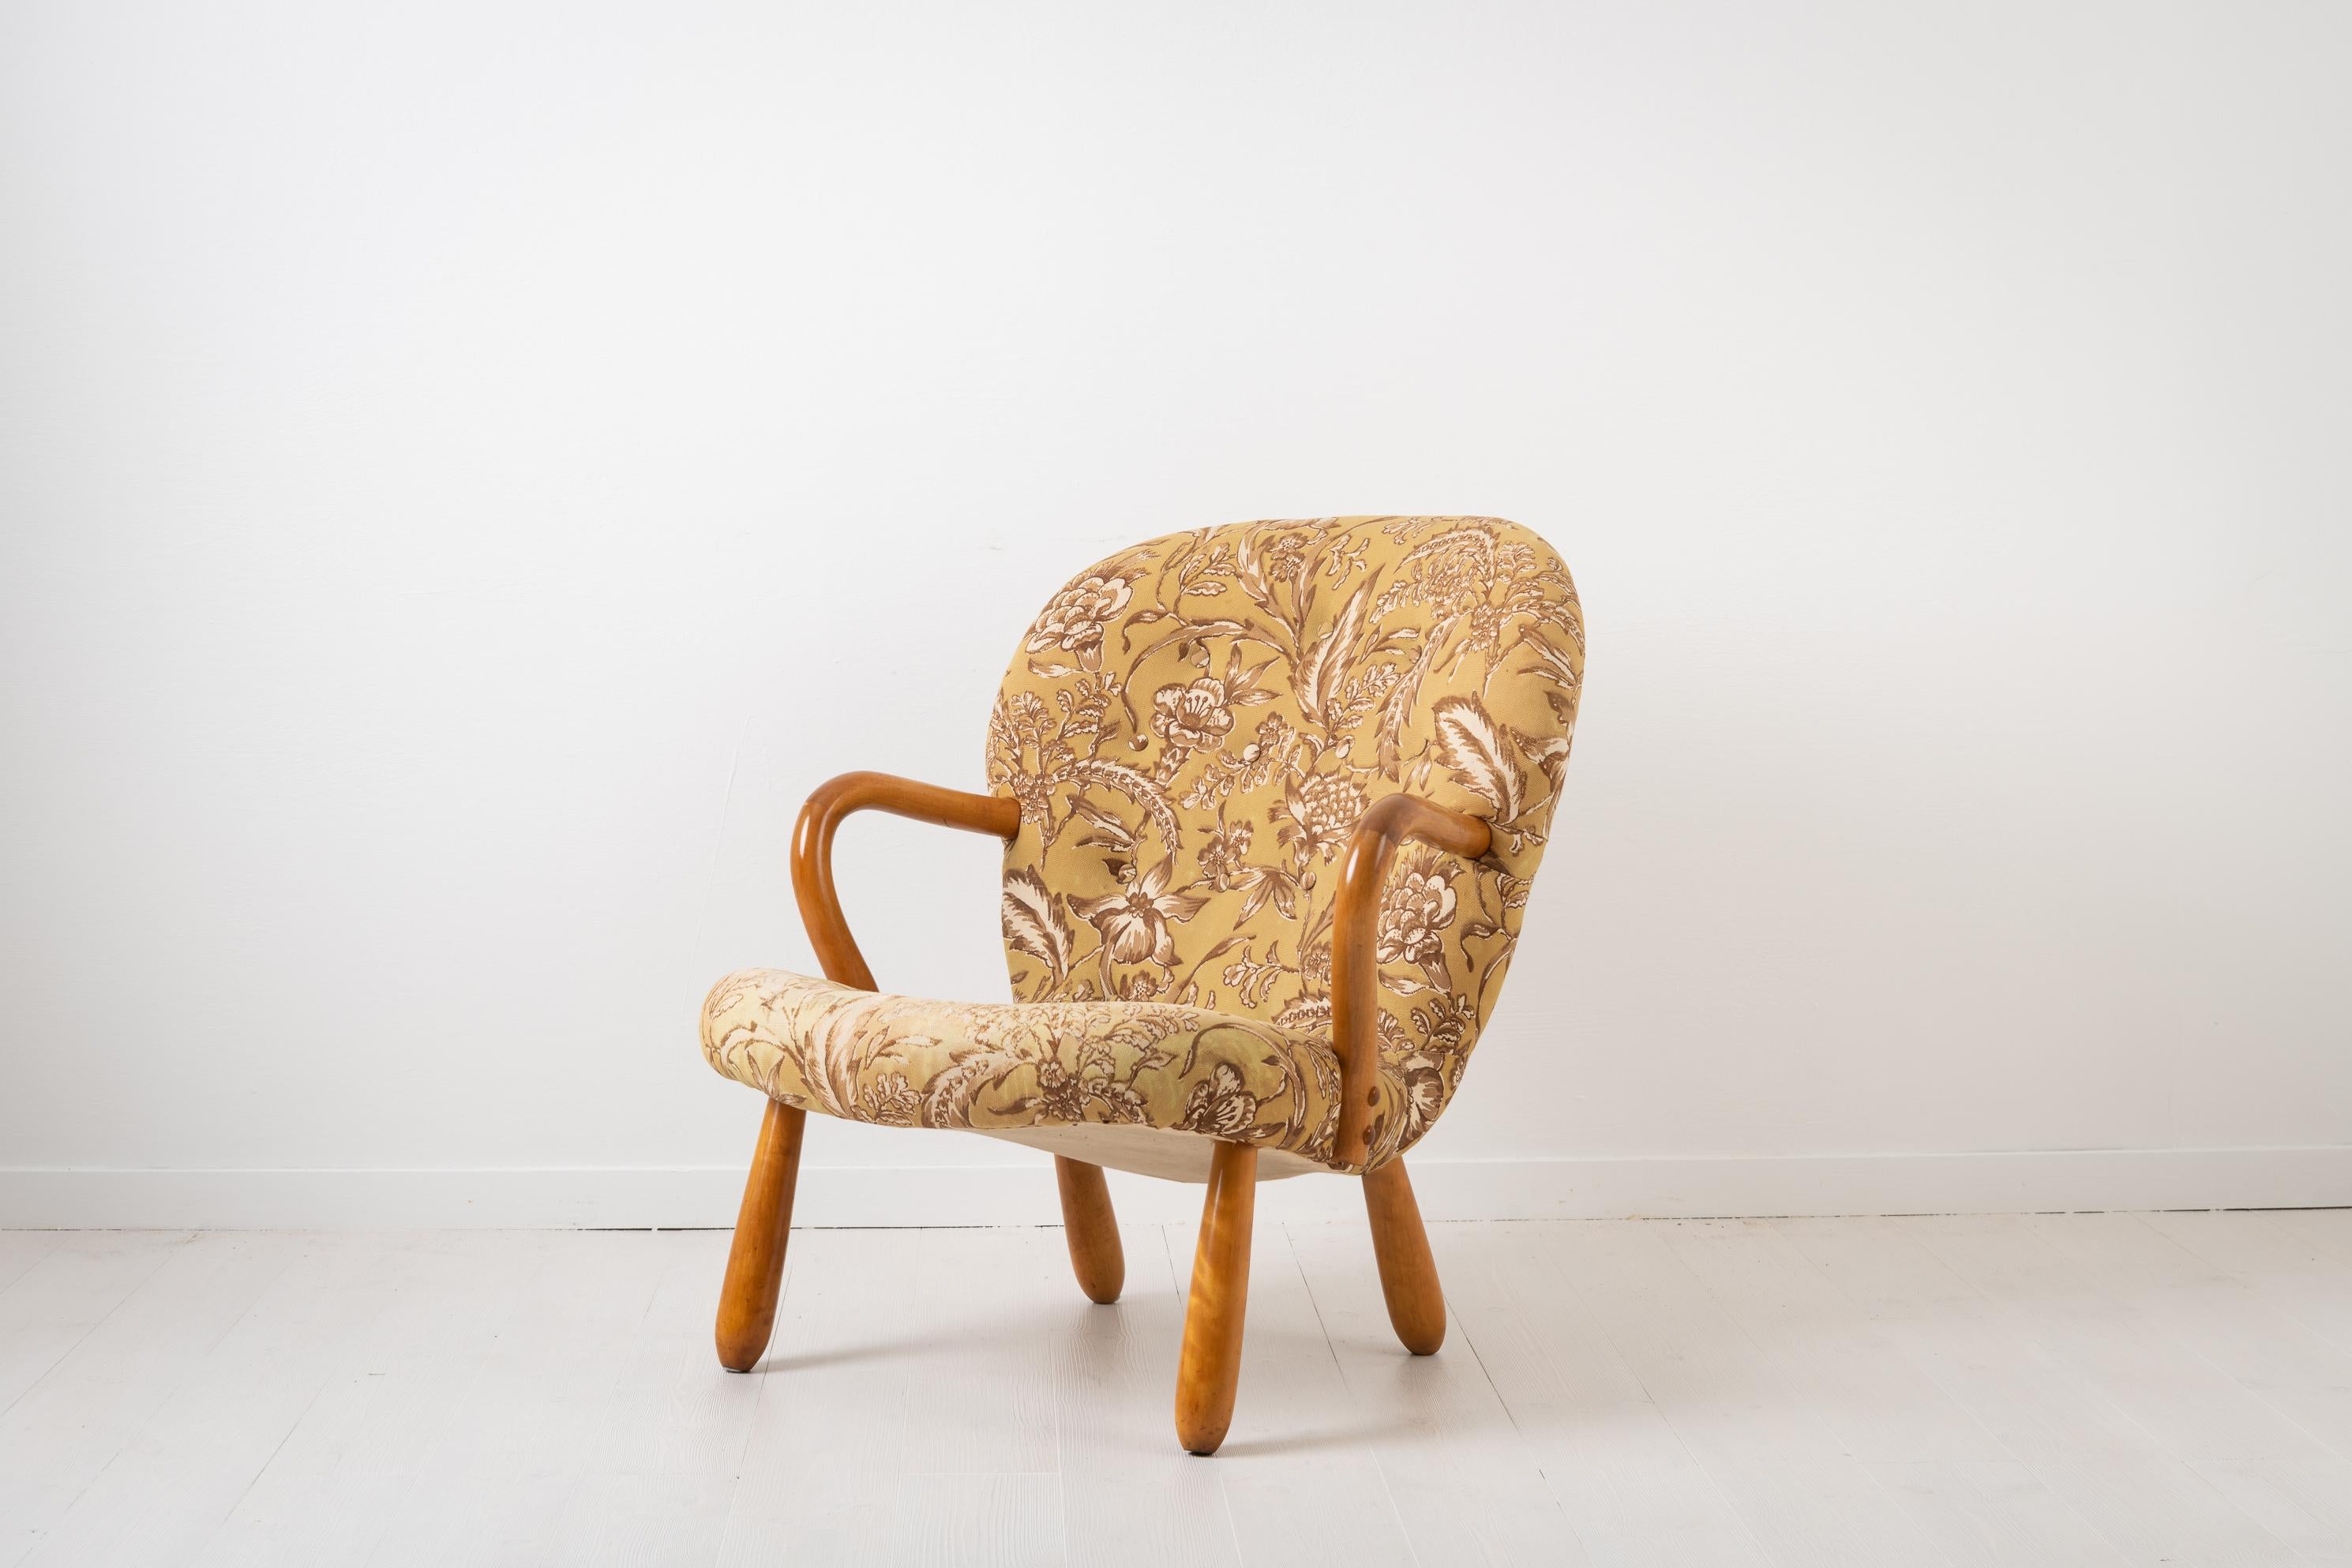 20th Century Scandinavian Modern Clam Chair Attributed to Philip Arctander